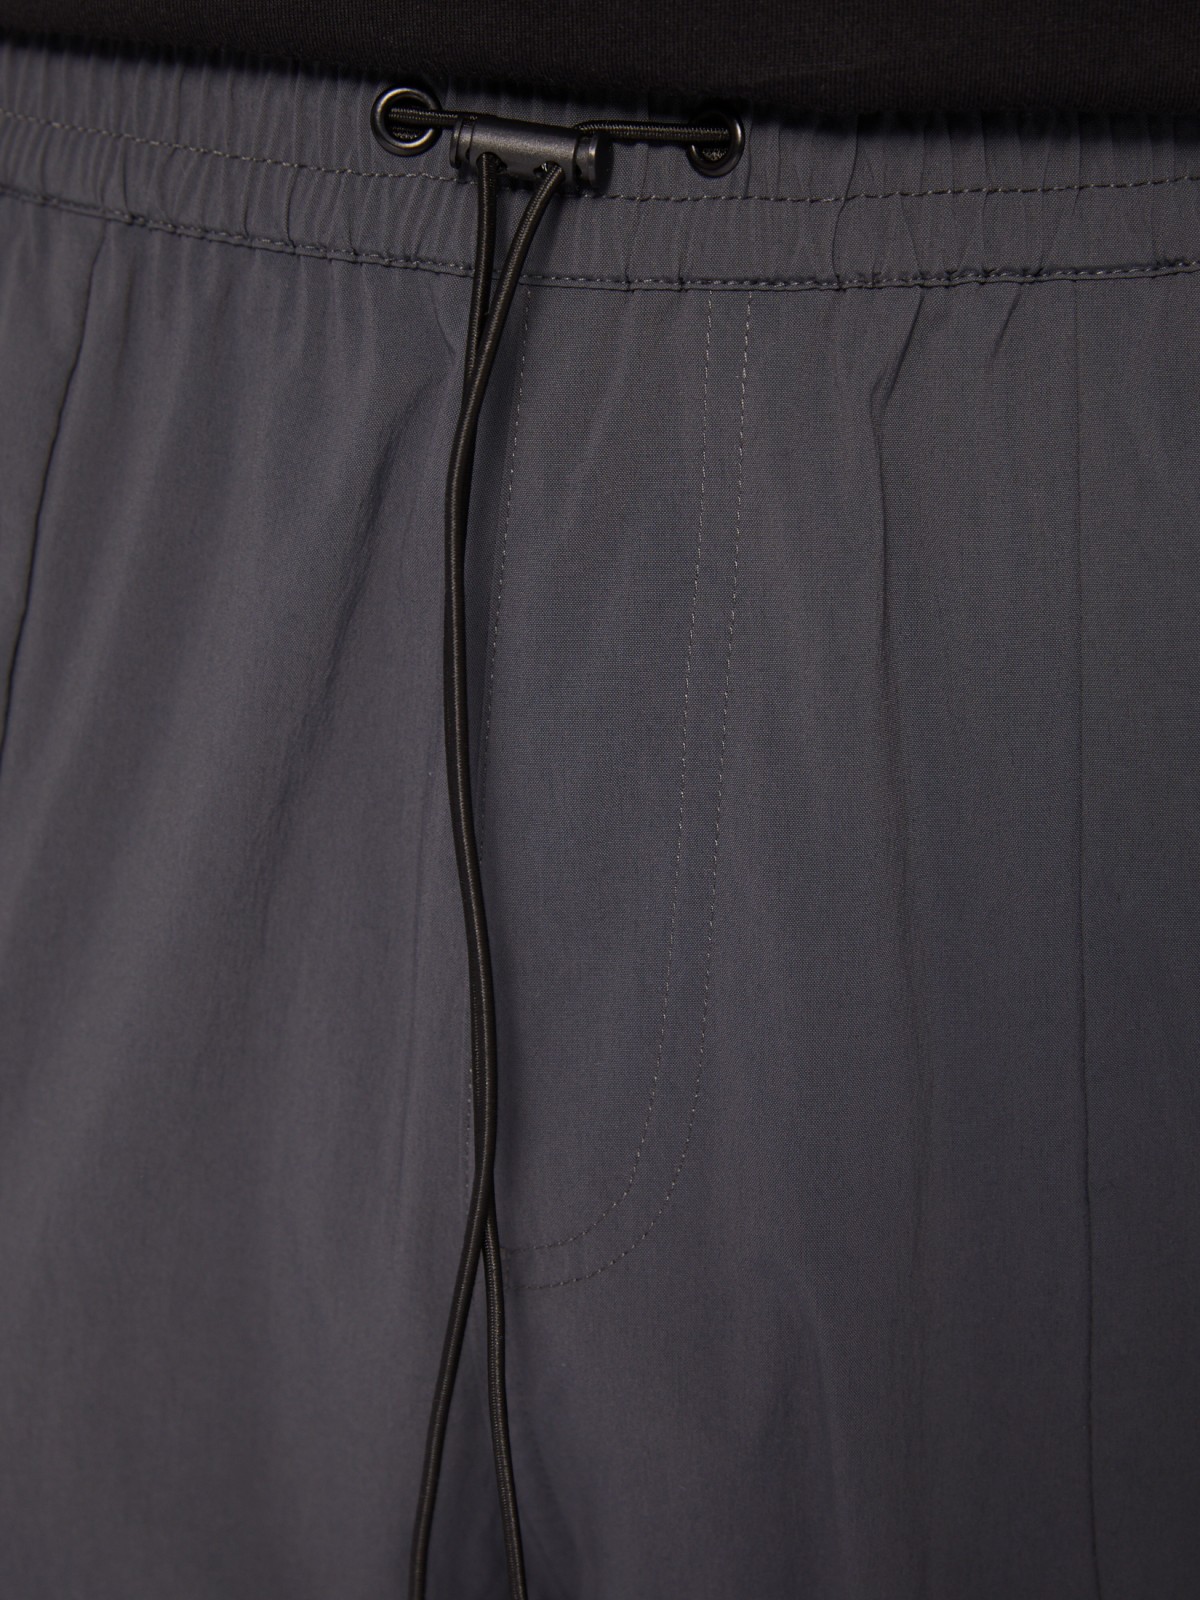 Брюки-джоггеры на кулиске с карманами карго zolla 01421730L041, цвет серый, размер 30 - фото 4